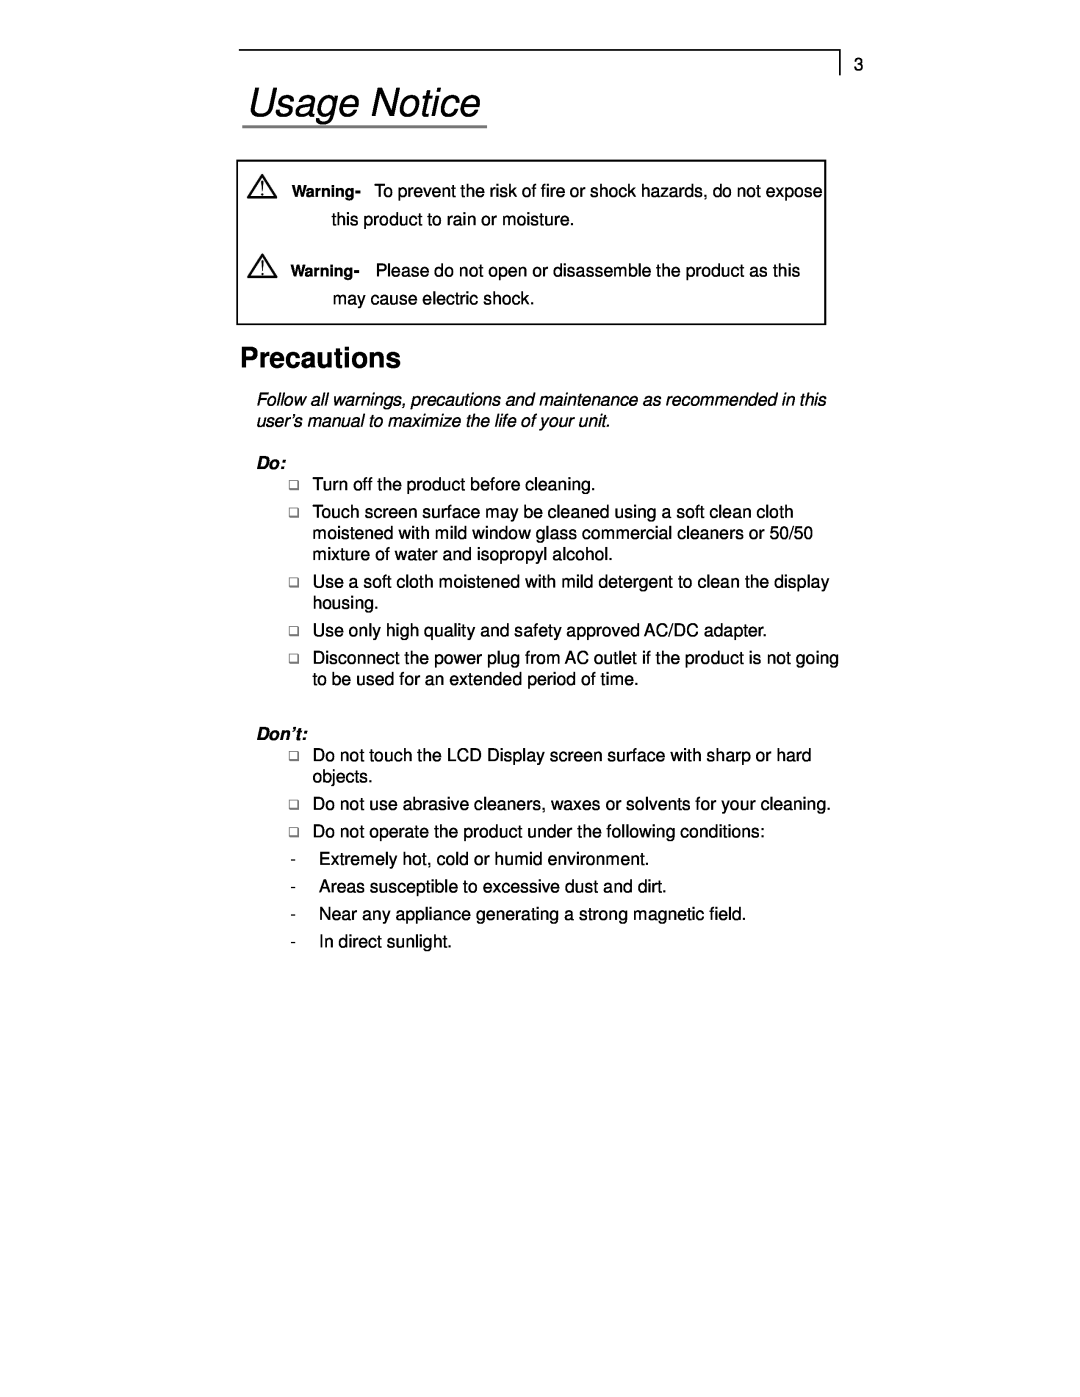 Planar PT1701MX manual Usage Notice, Precautions, Don’t 